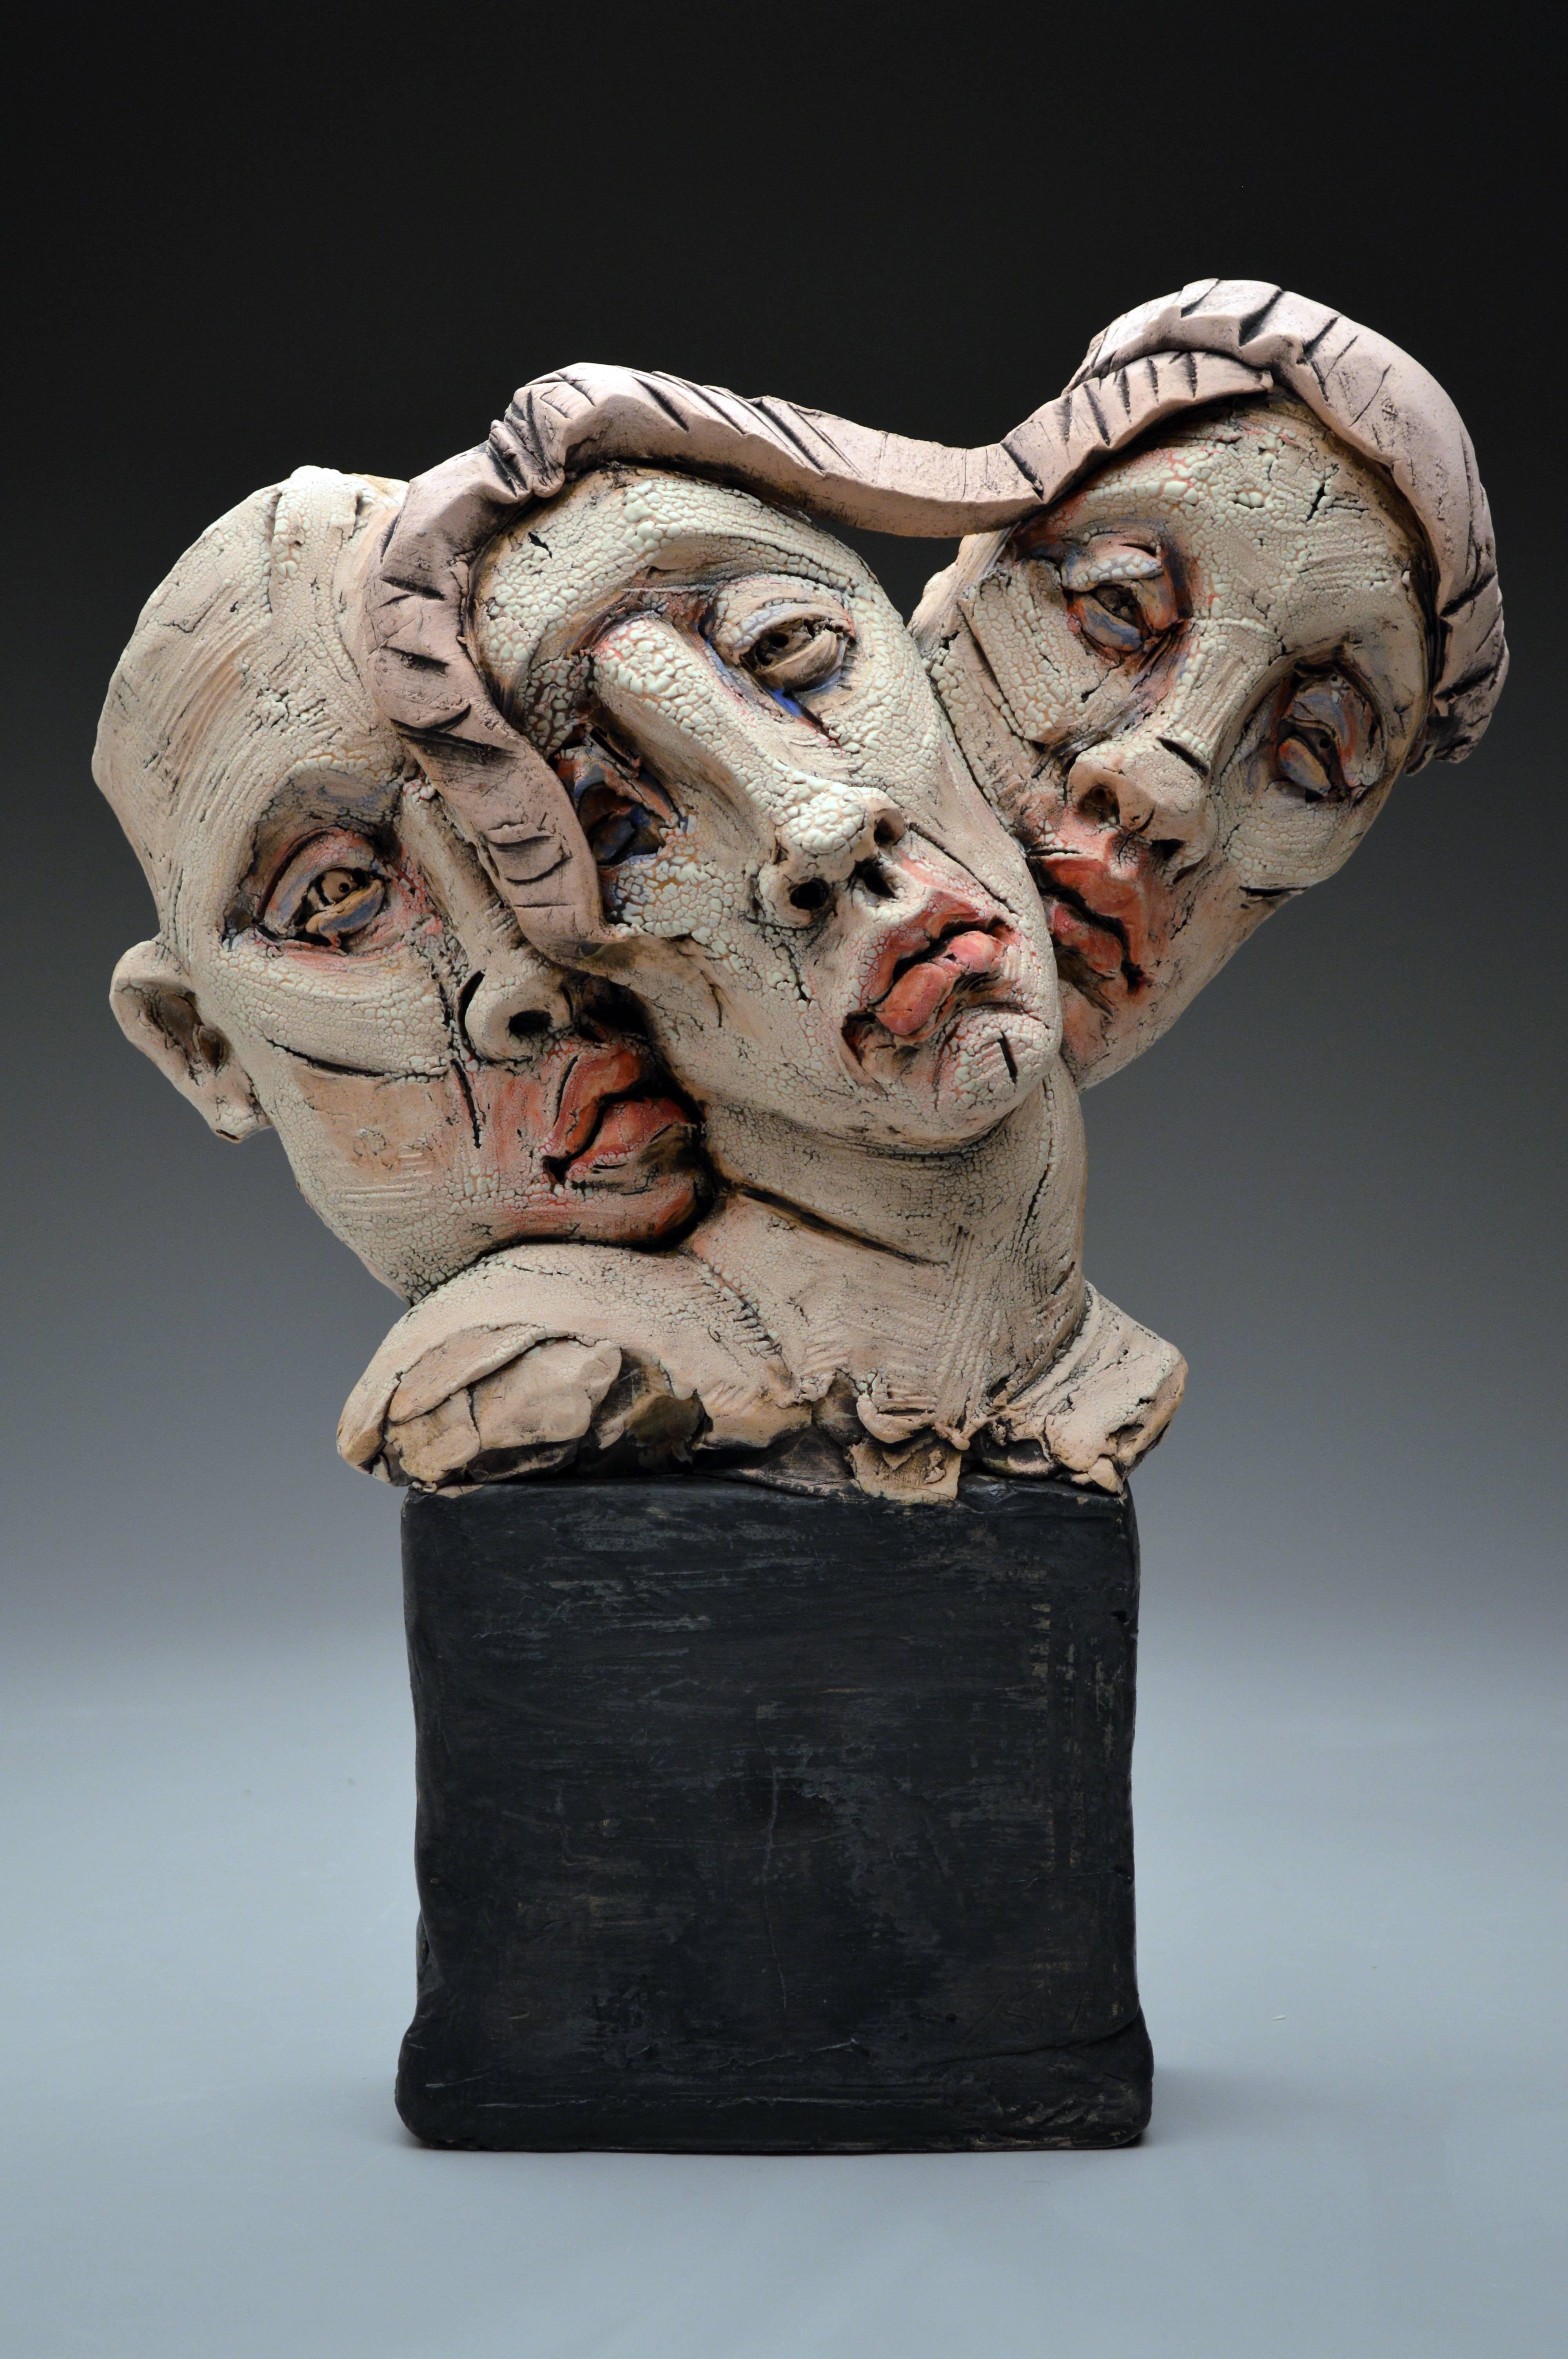 Chris Riccardo Figurative Sculpture - "Threesome", Stoneware Sculpture with Glaze and Underglaze